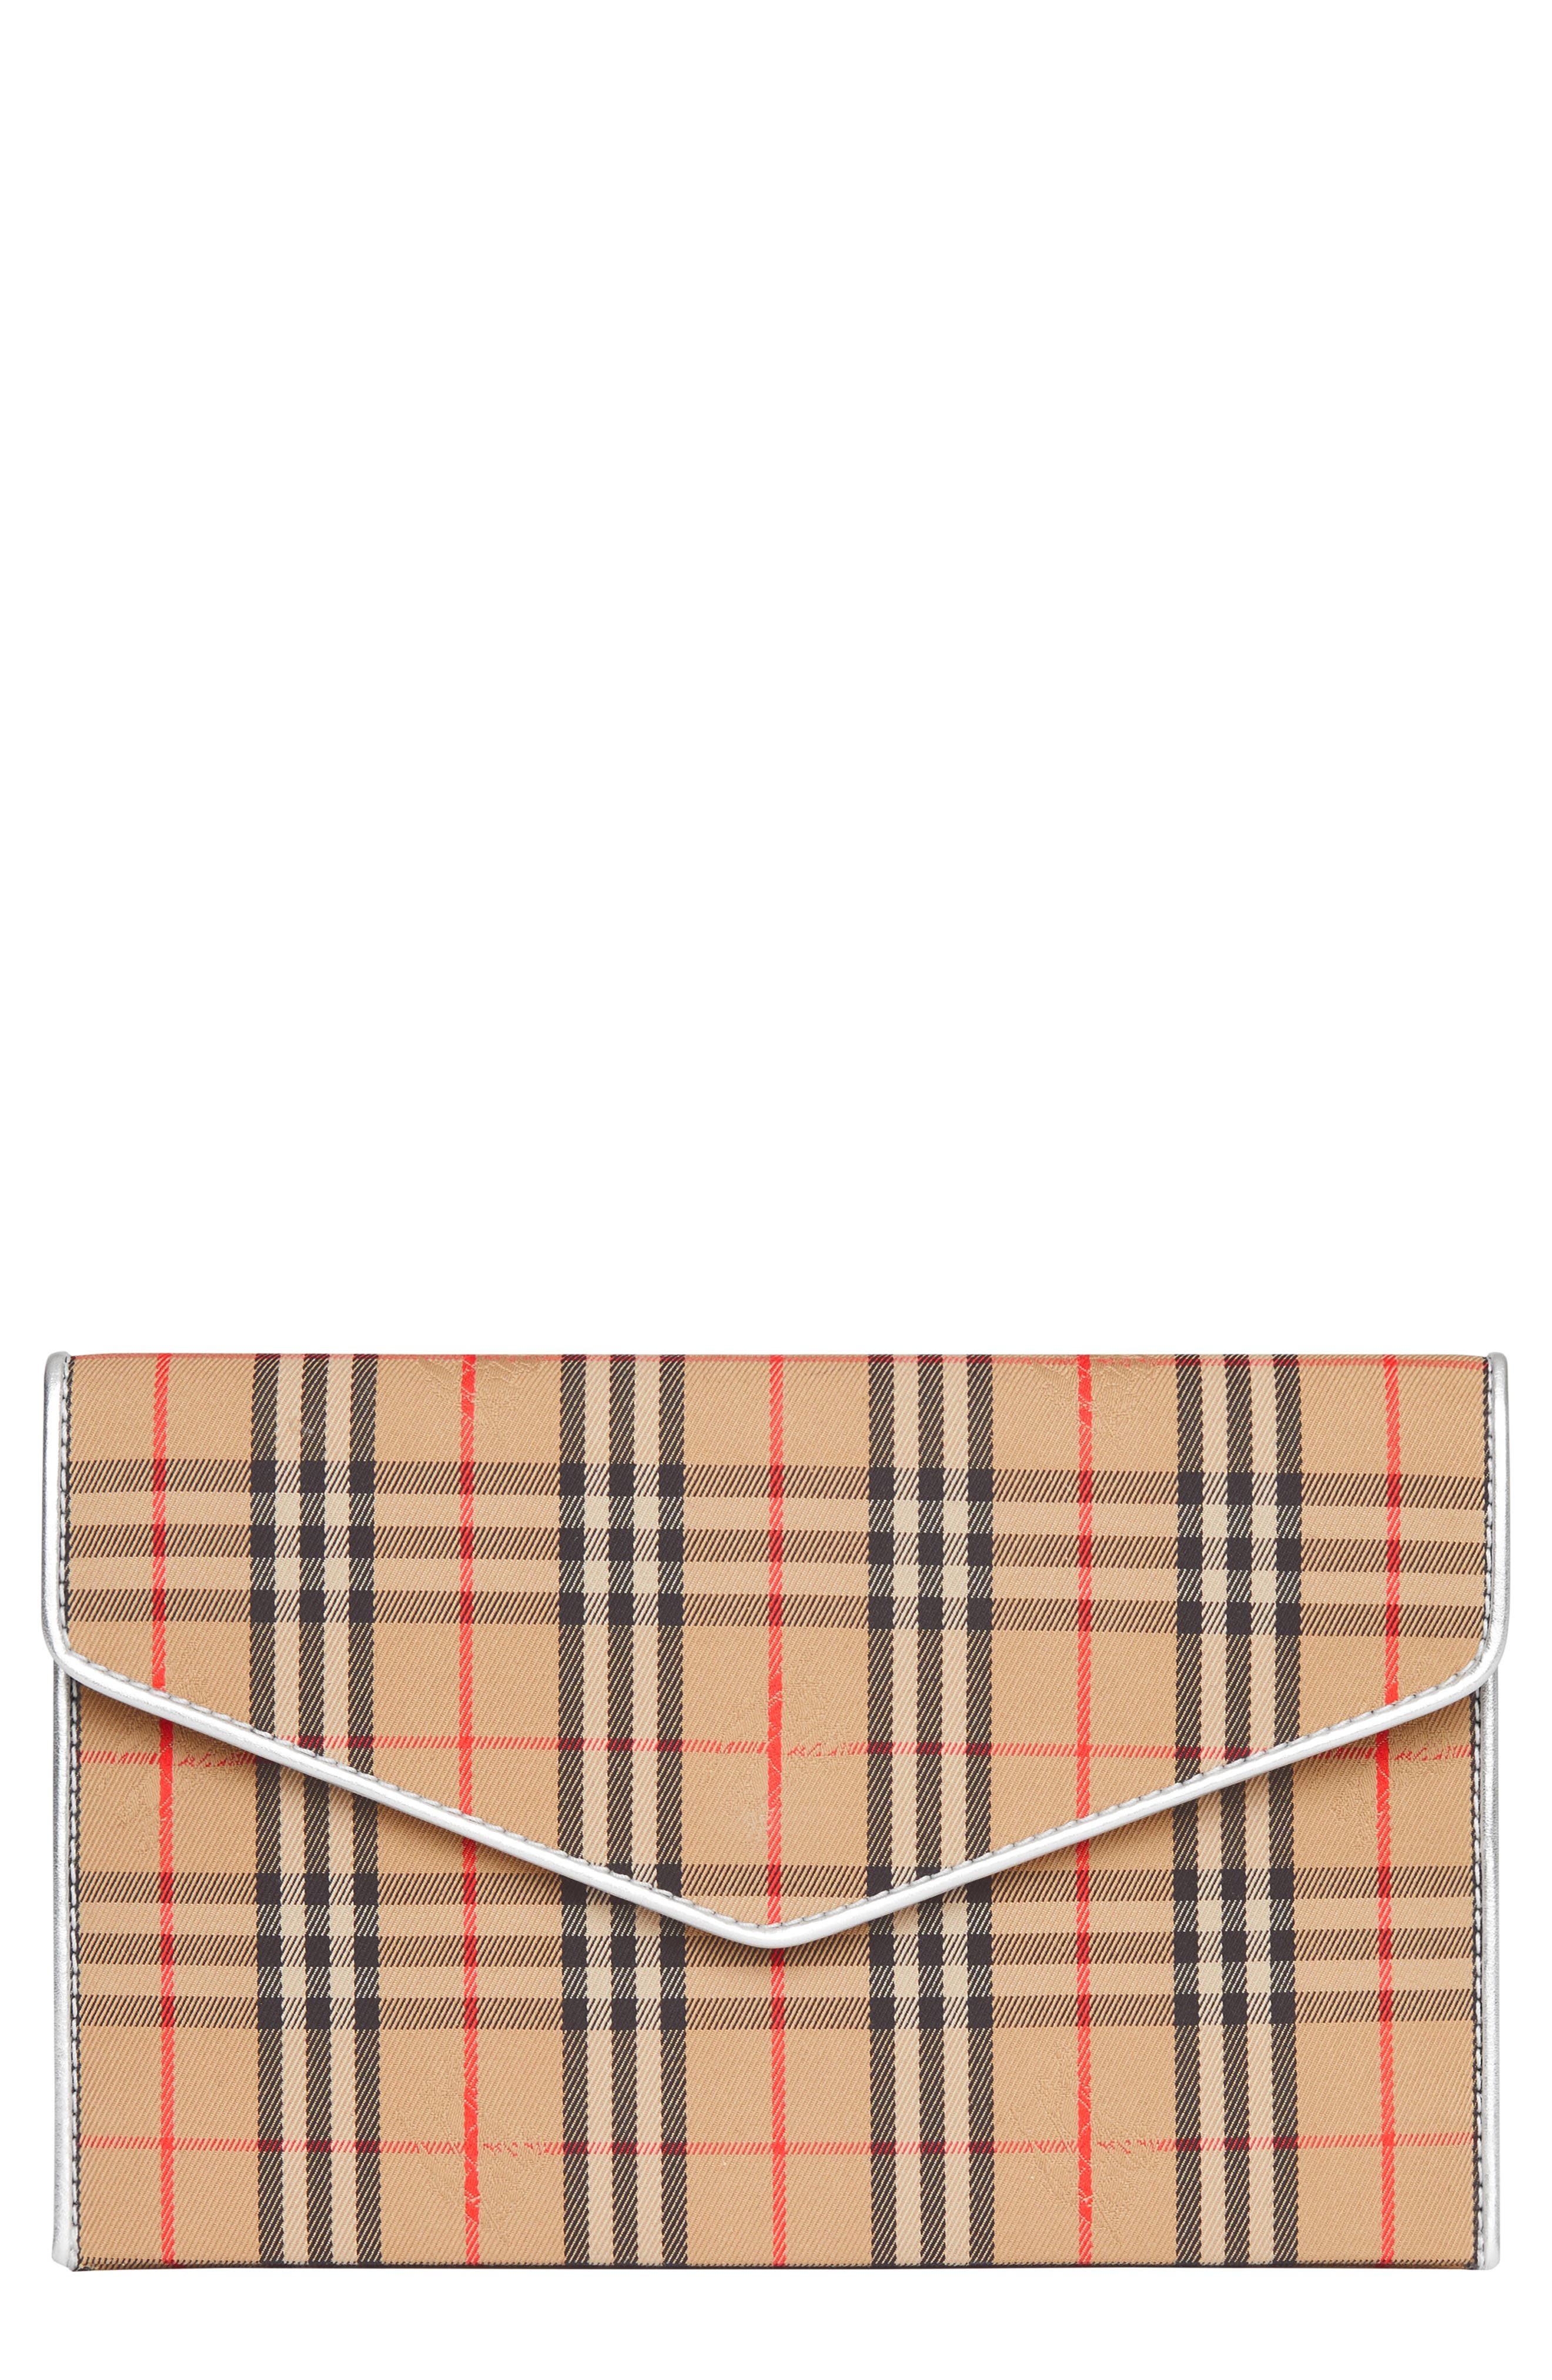 burberry envelope bag